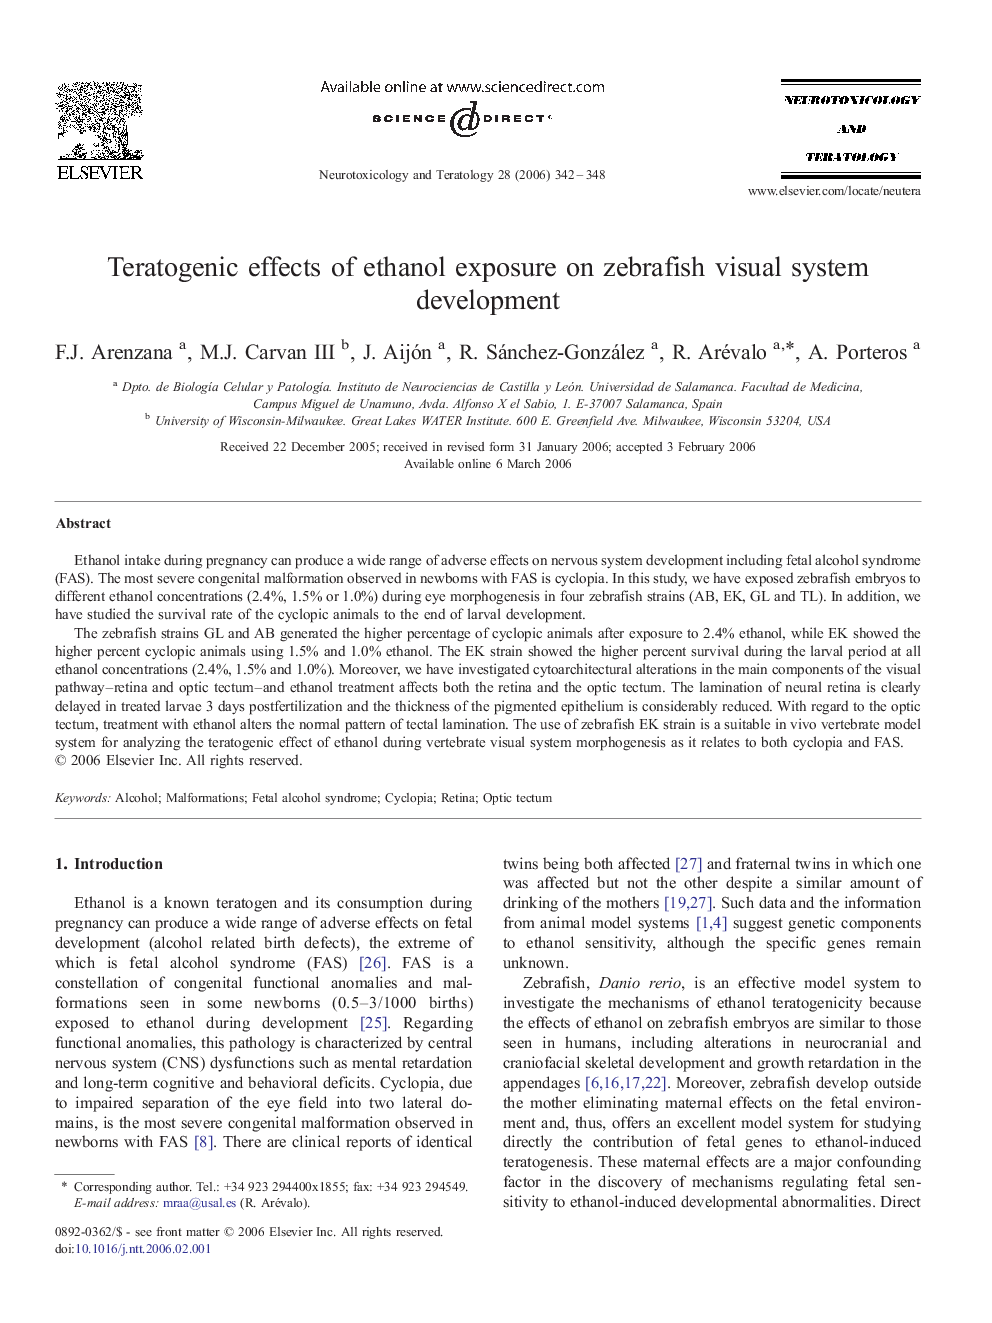 Teratogenic effects of ethanol exposure on zebrafish visual system development